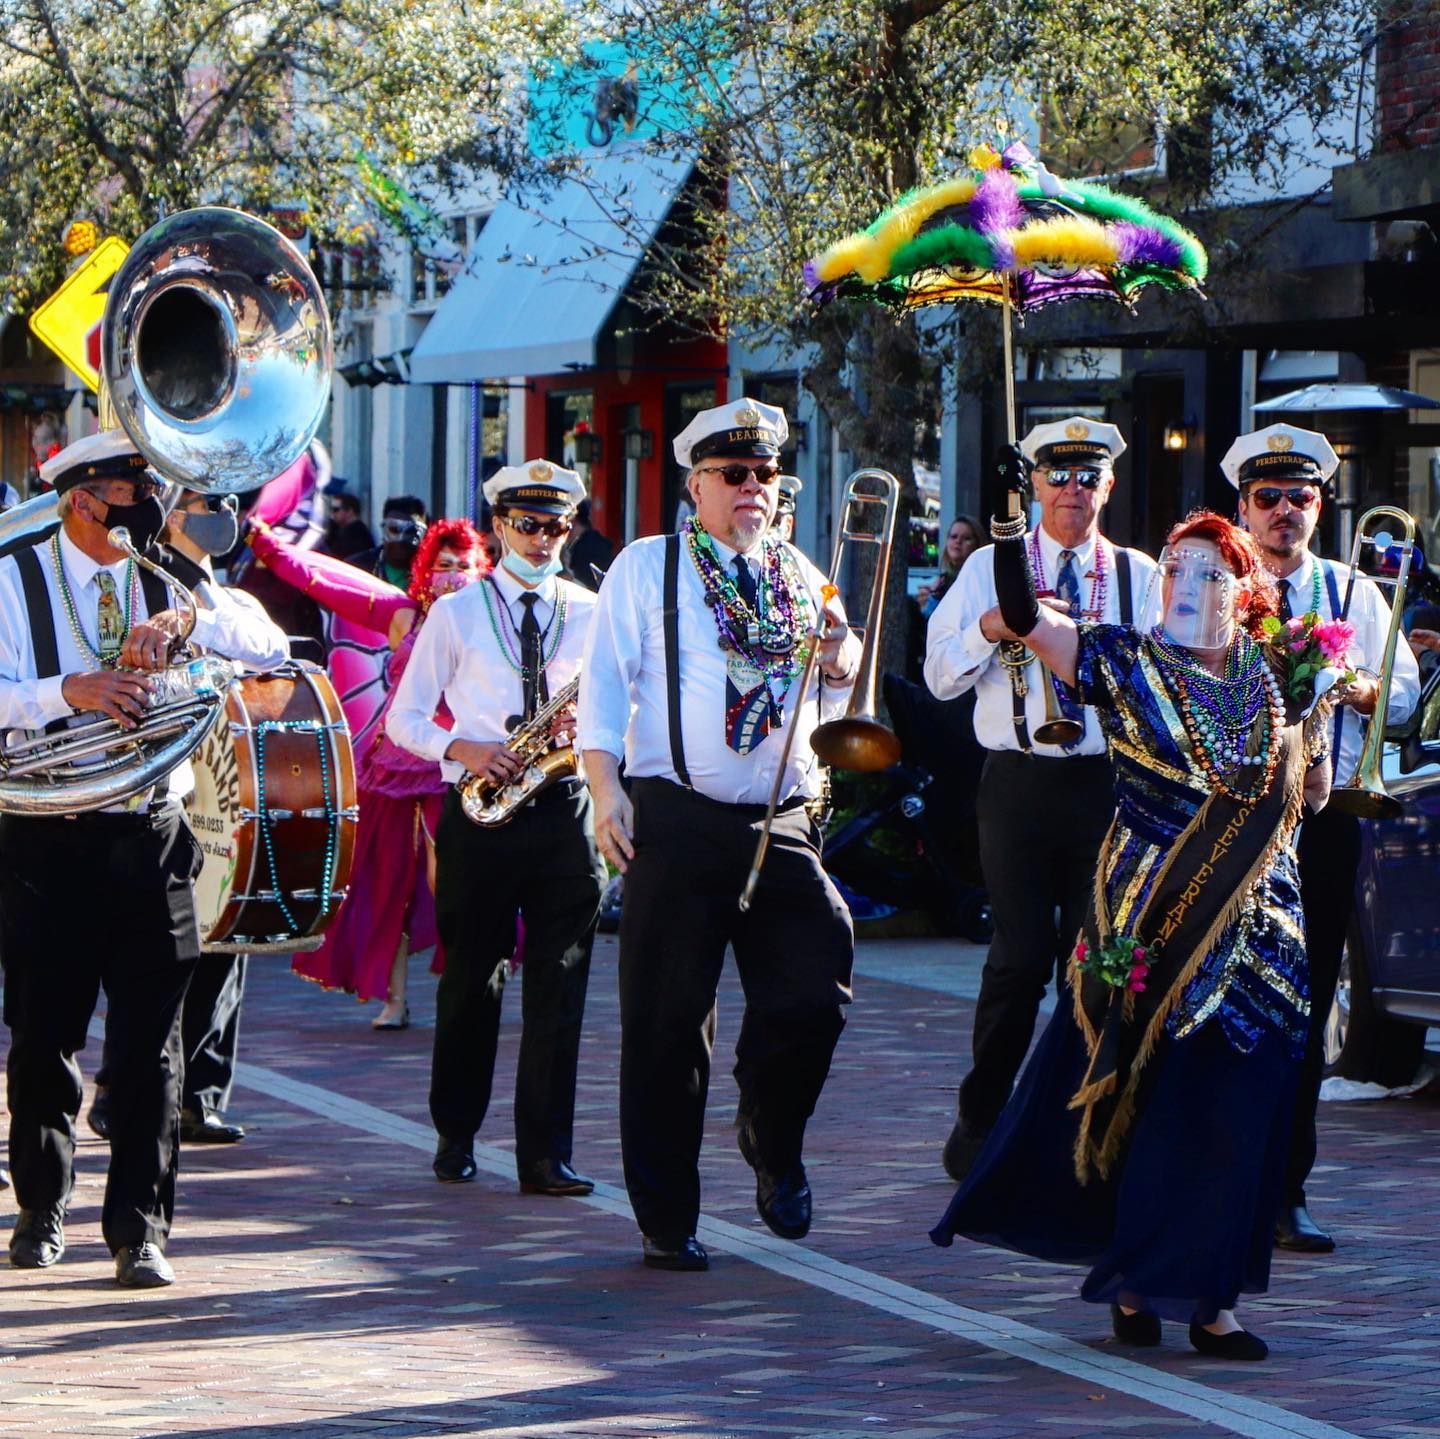 Sanford Mardi Gras in Florida